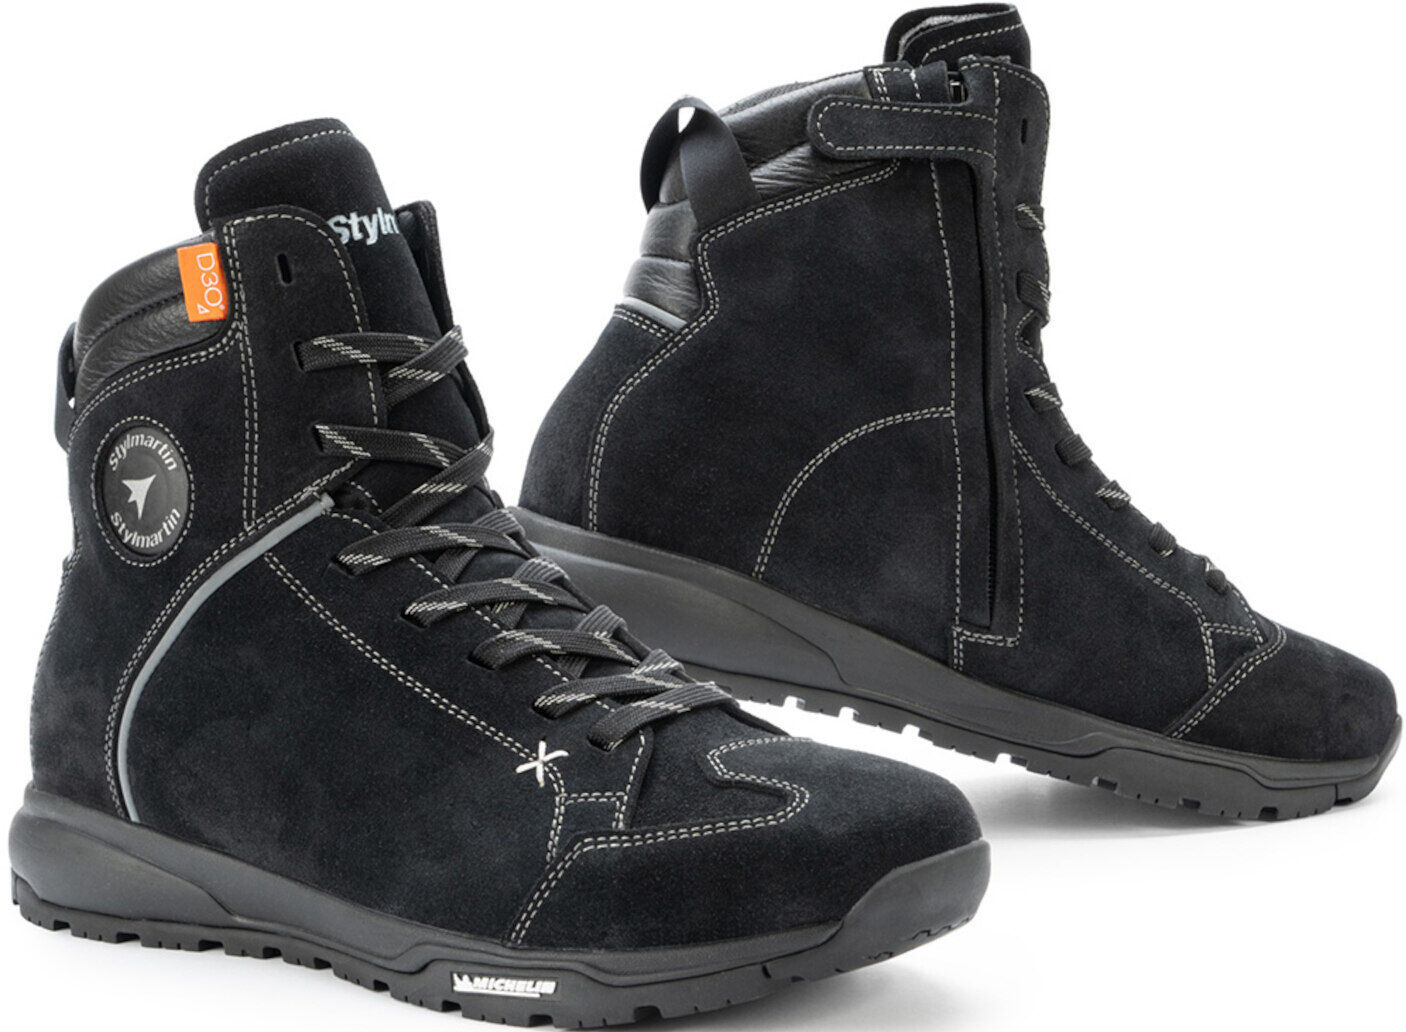 Stylmartin Zed Zapatos de moto impermeables - Negro (46)